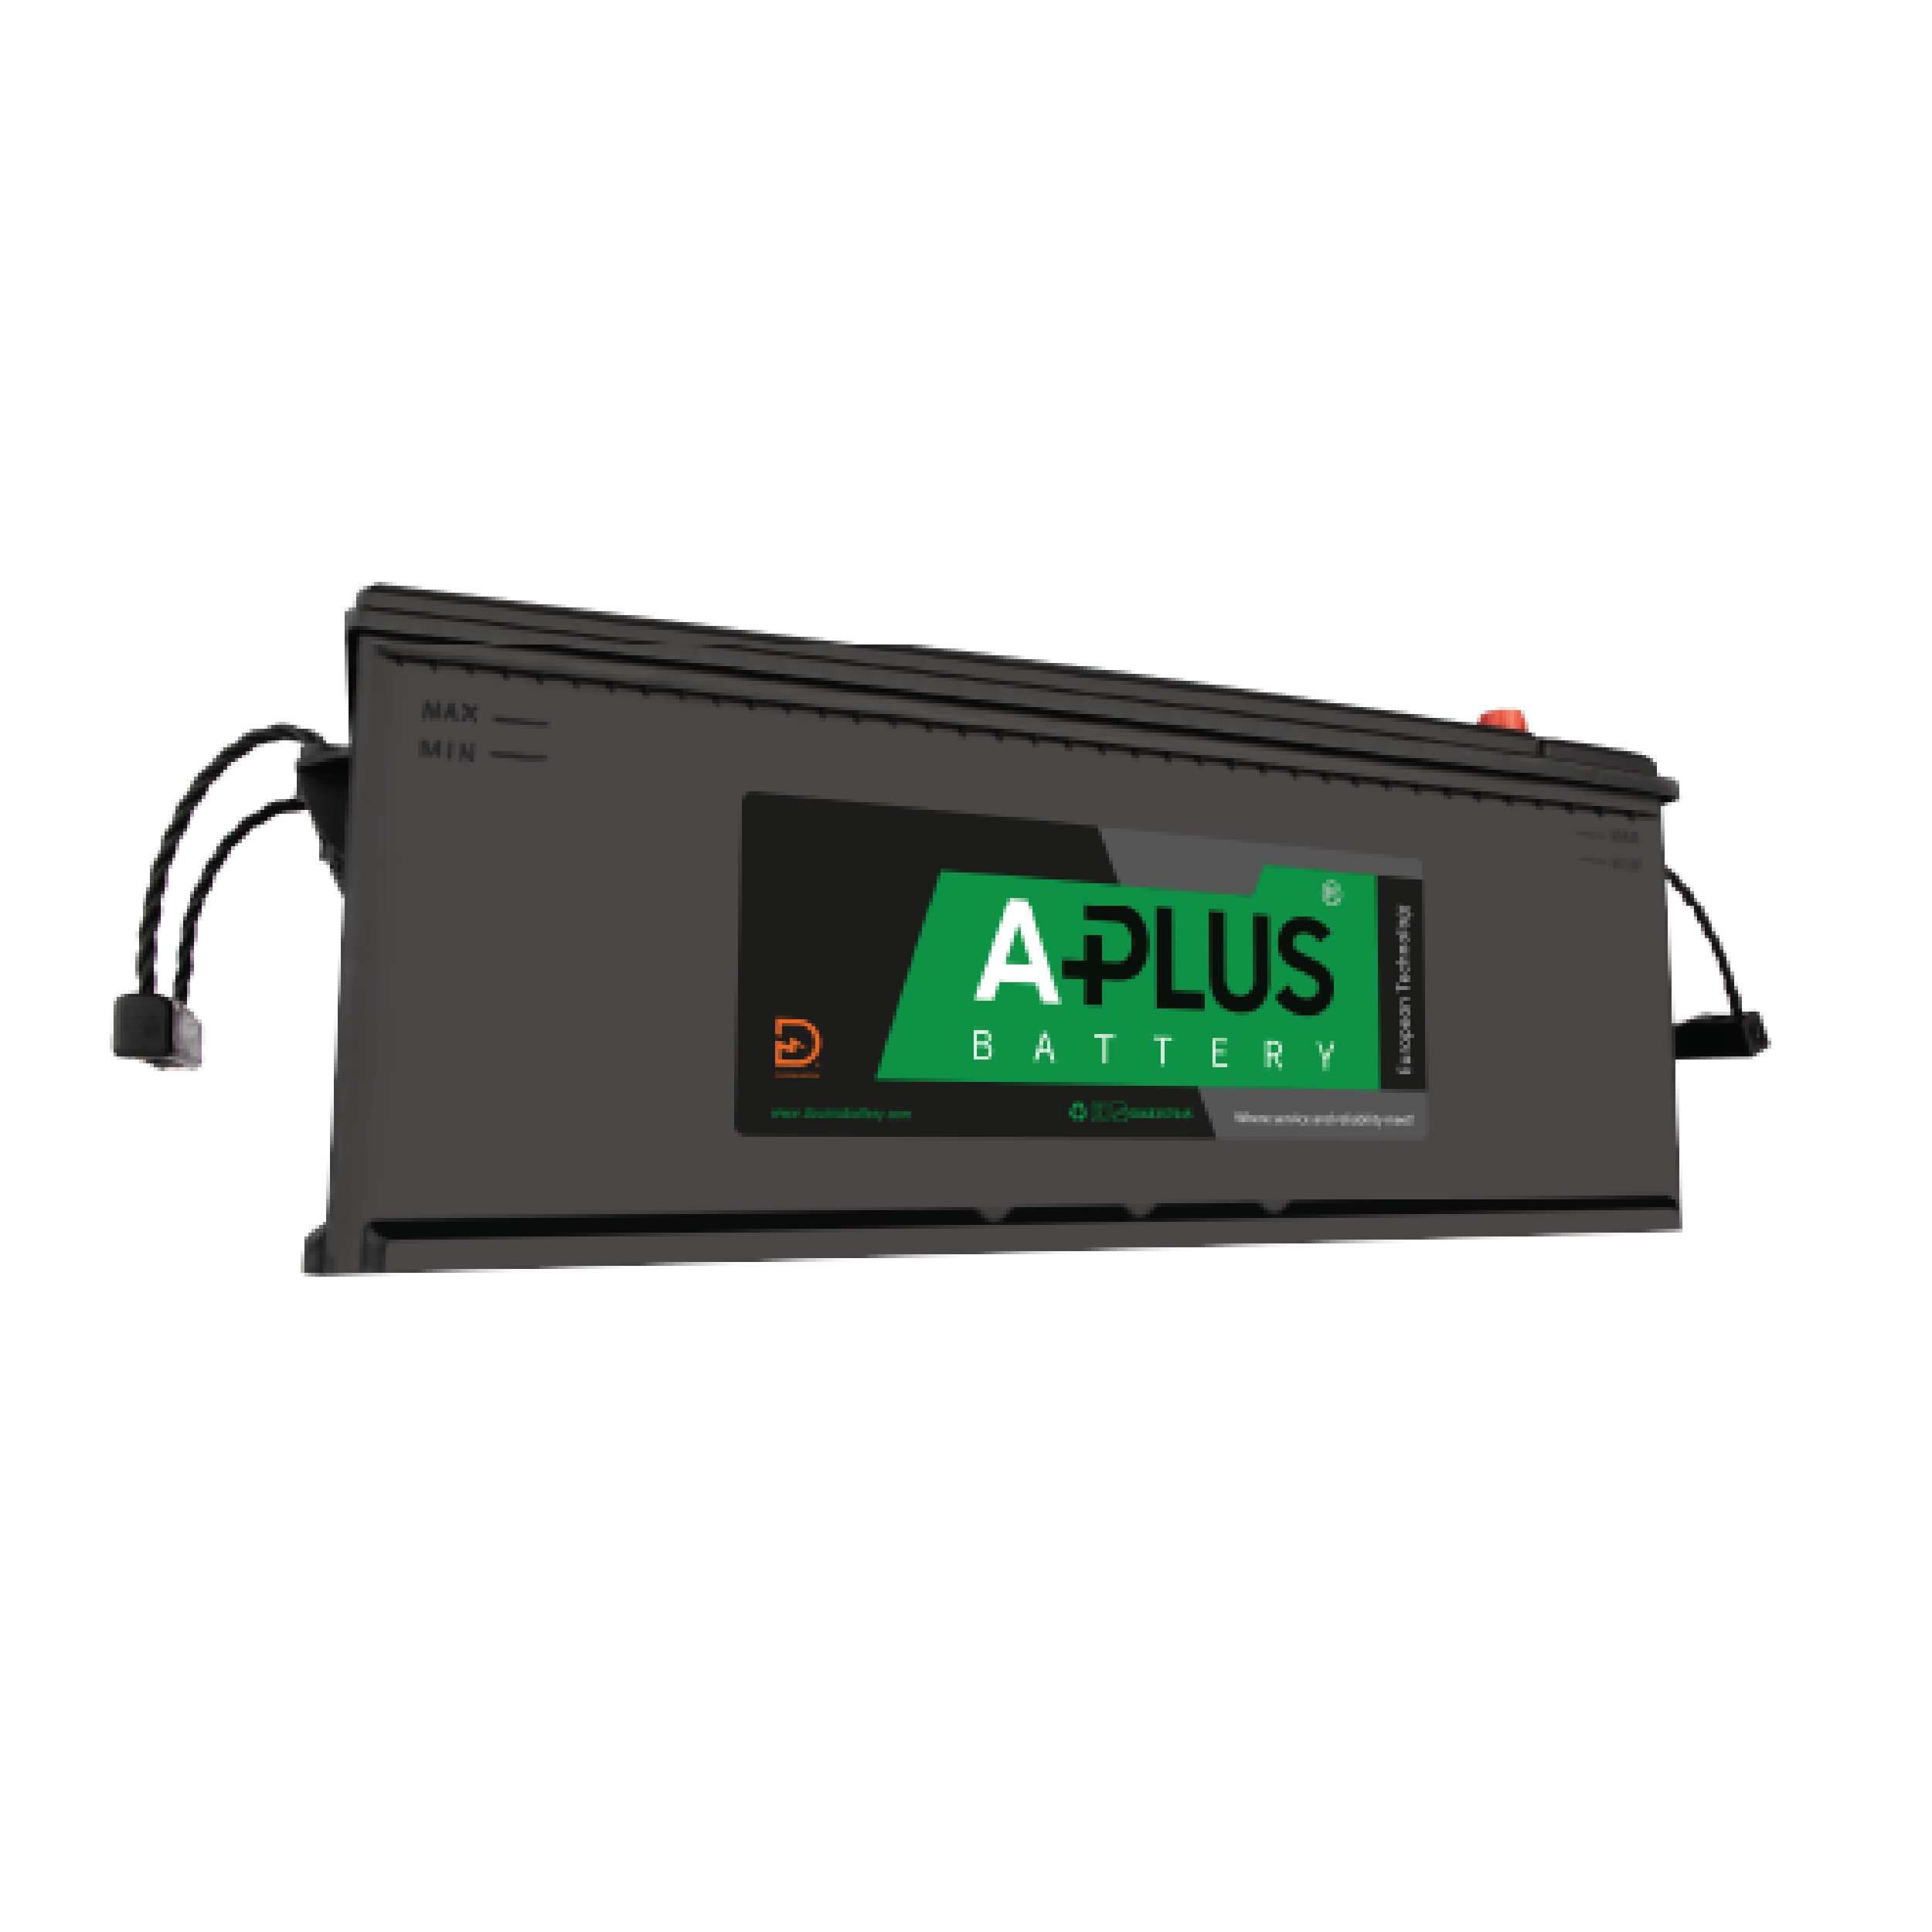 Aplus Capacity 230AH Type C Battery